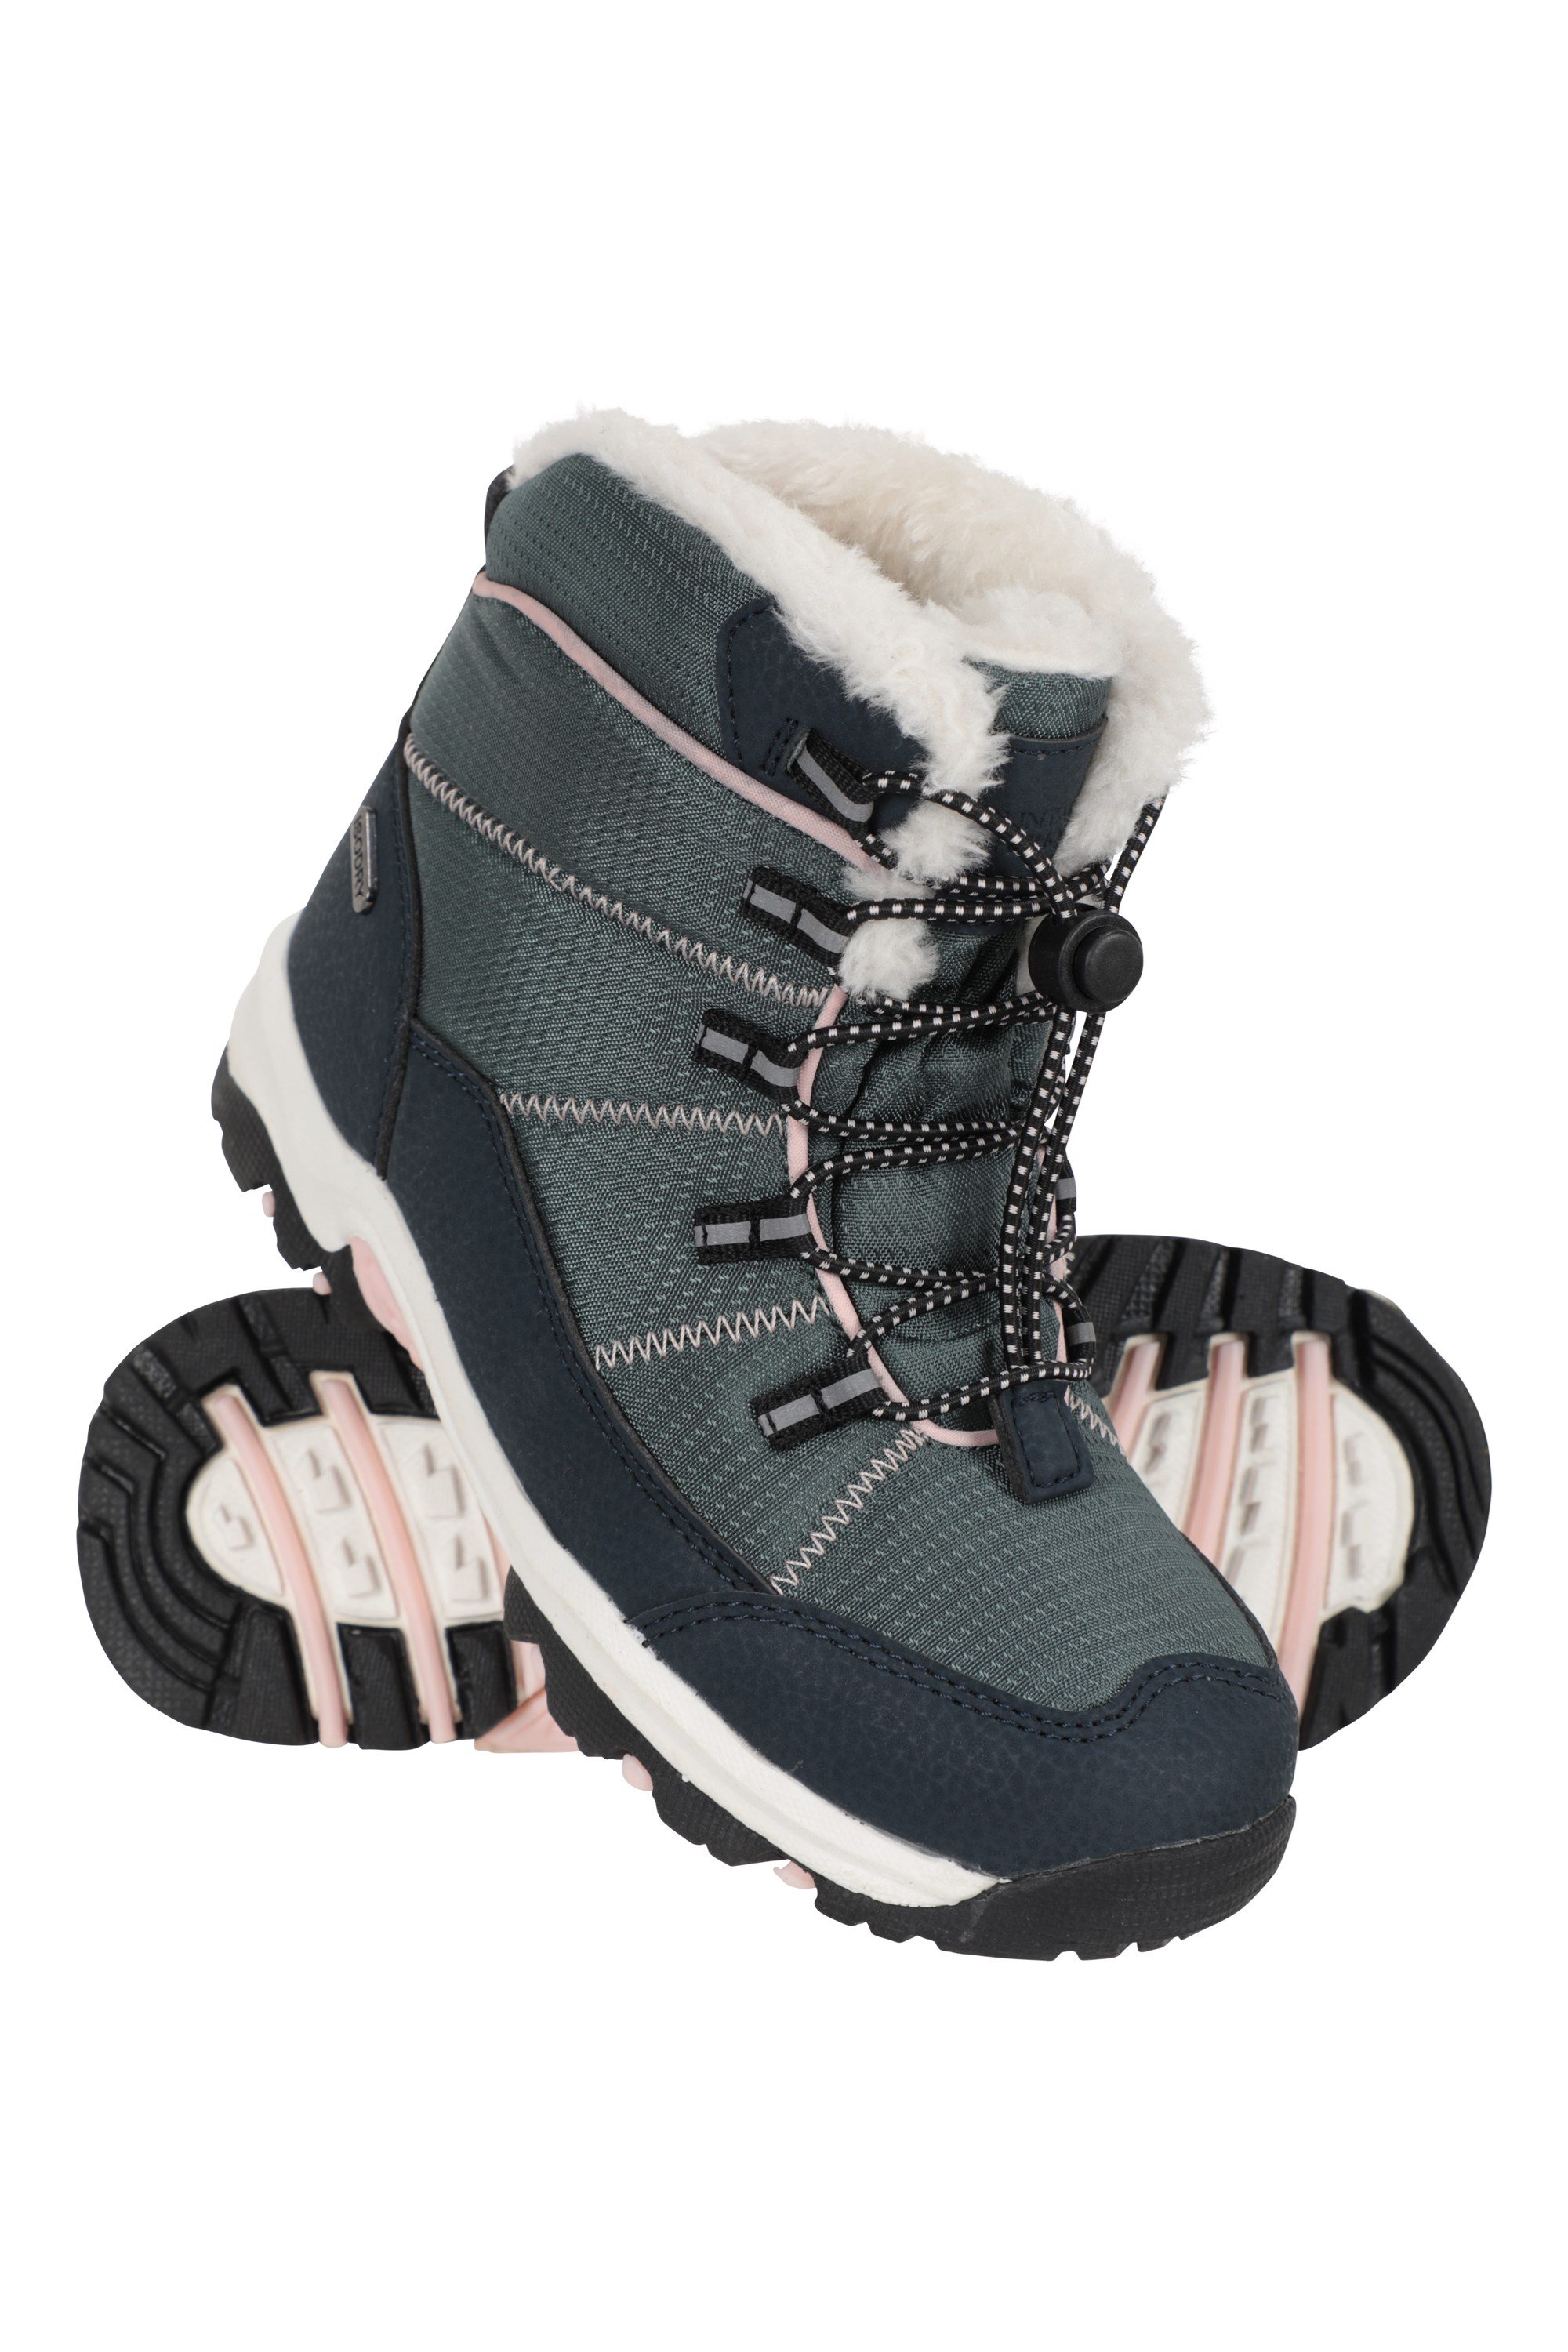 kids waterproof snow boots